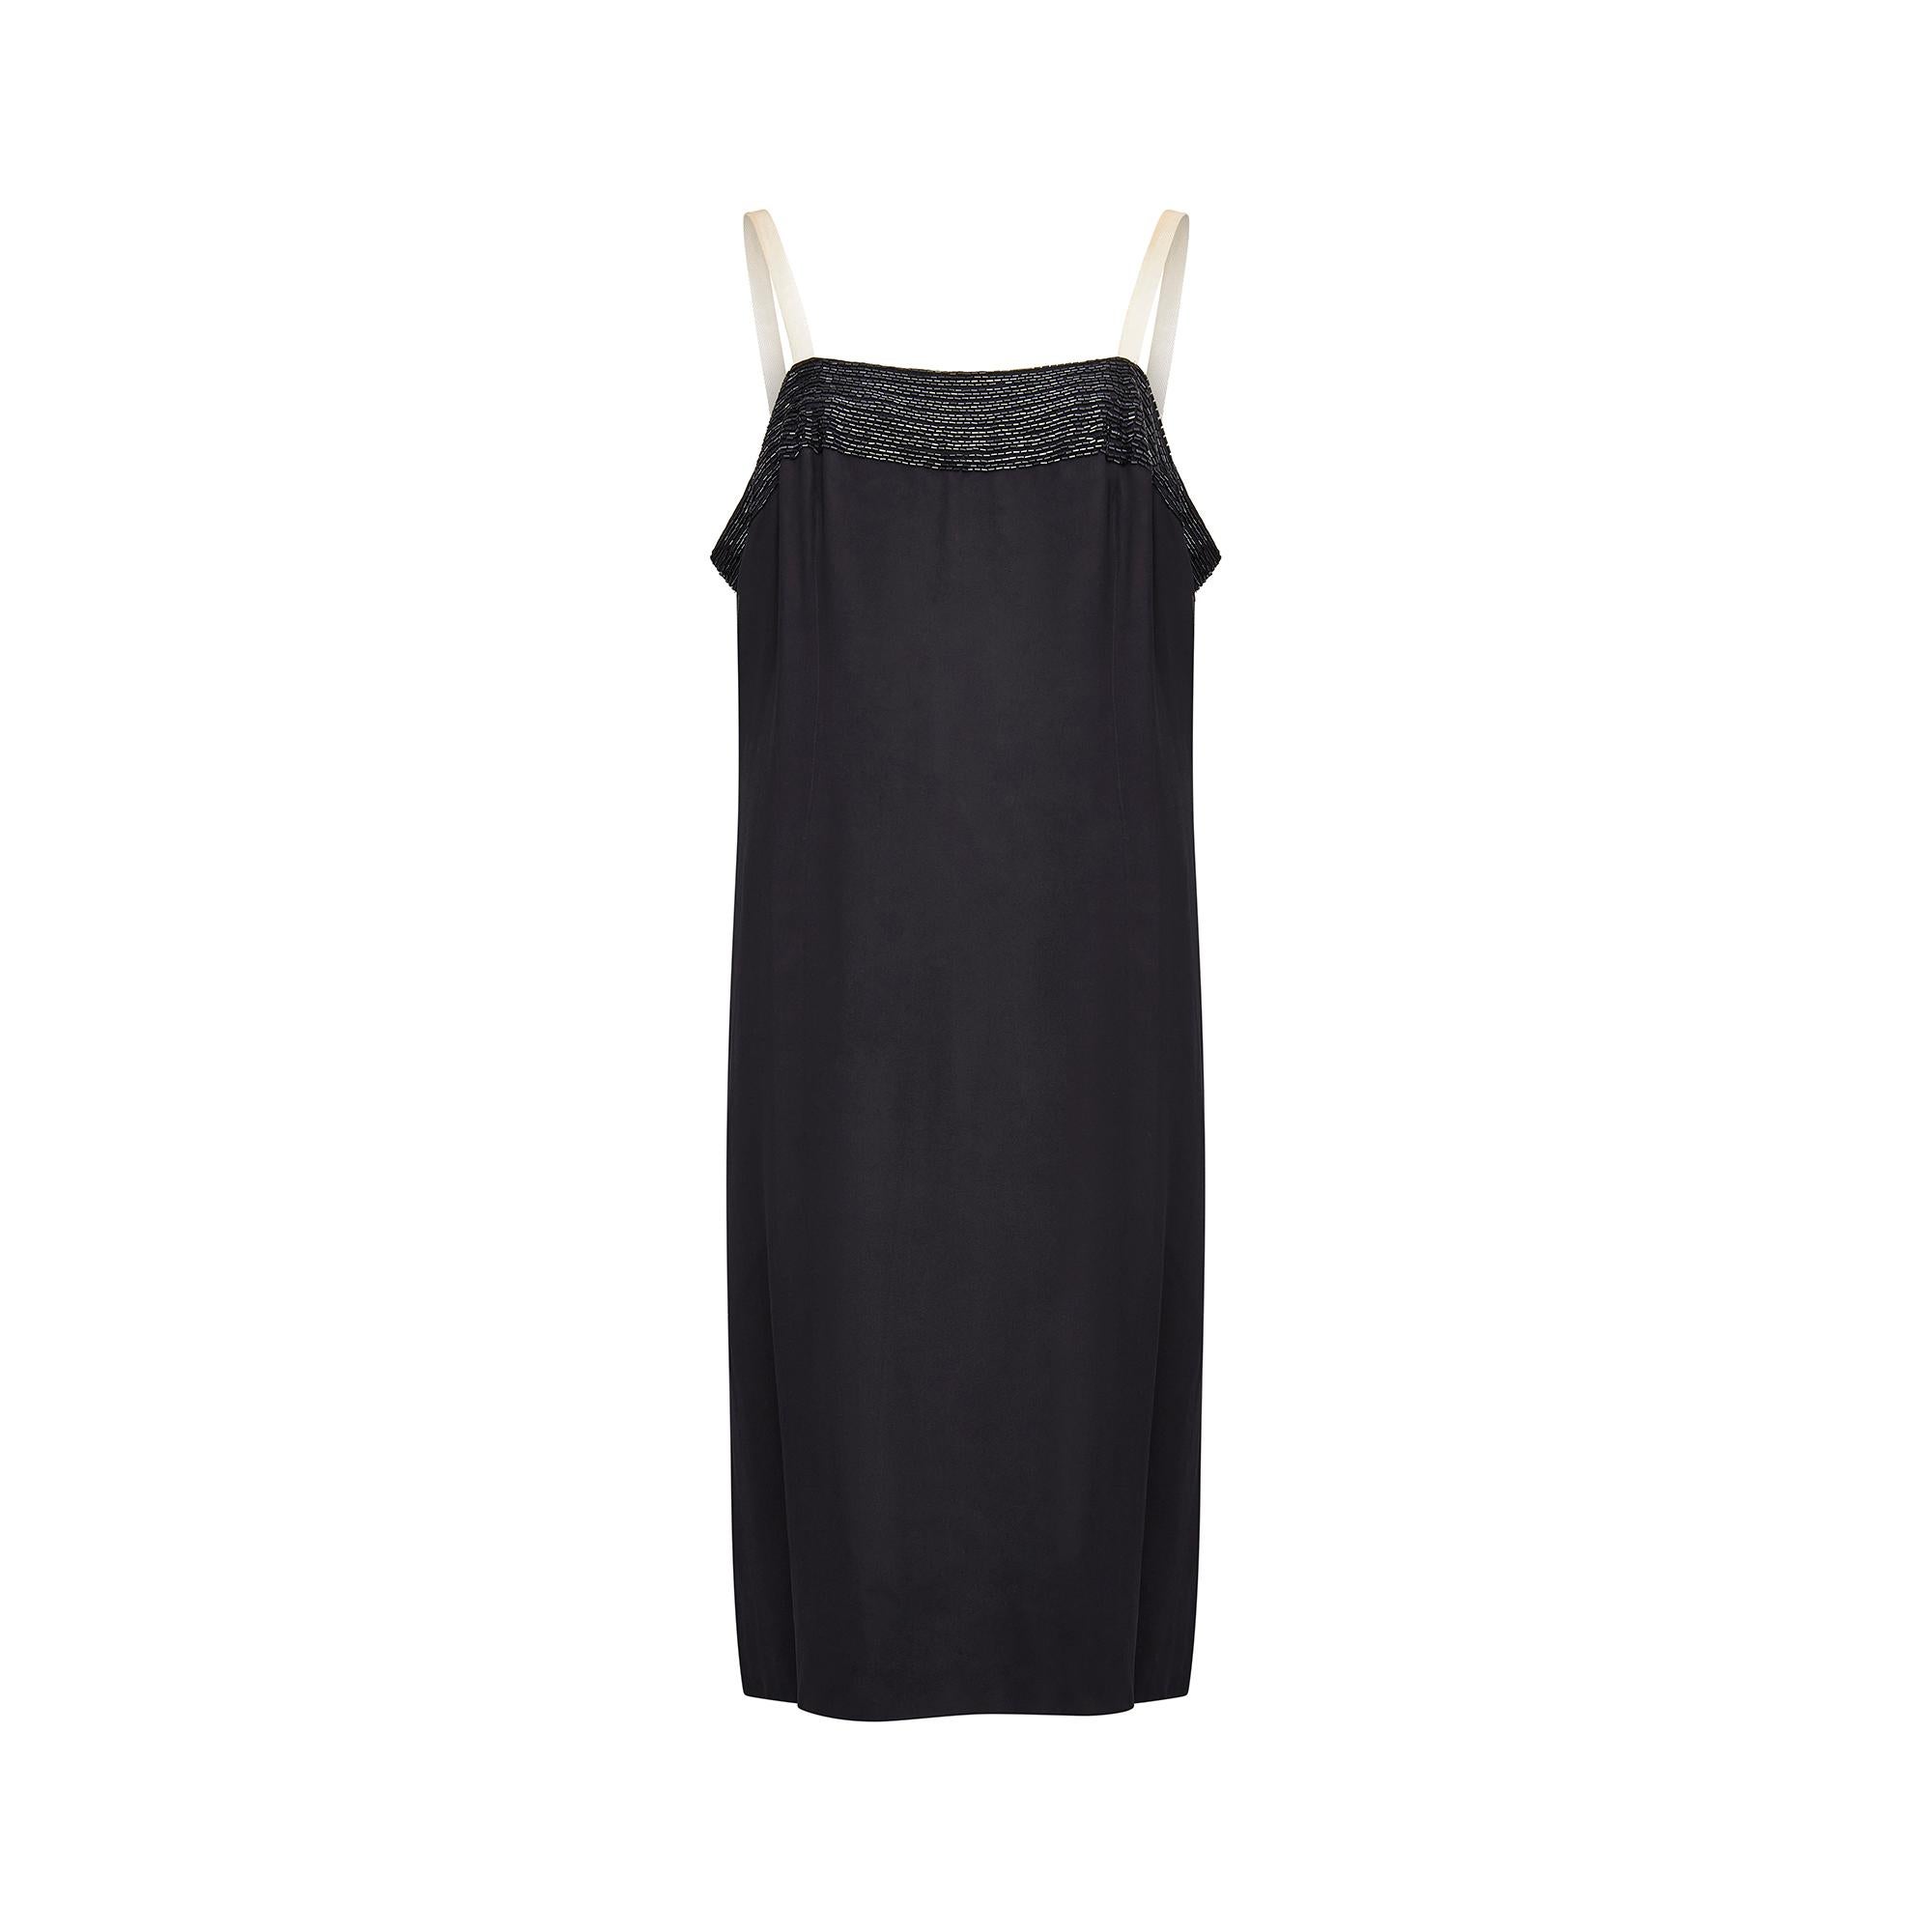 1960s Jacqueline Godard Couture Black Silk Chiffon Dress Ensemble For Sale 1